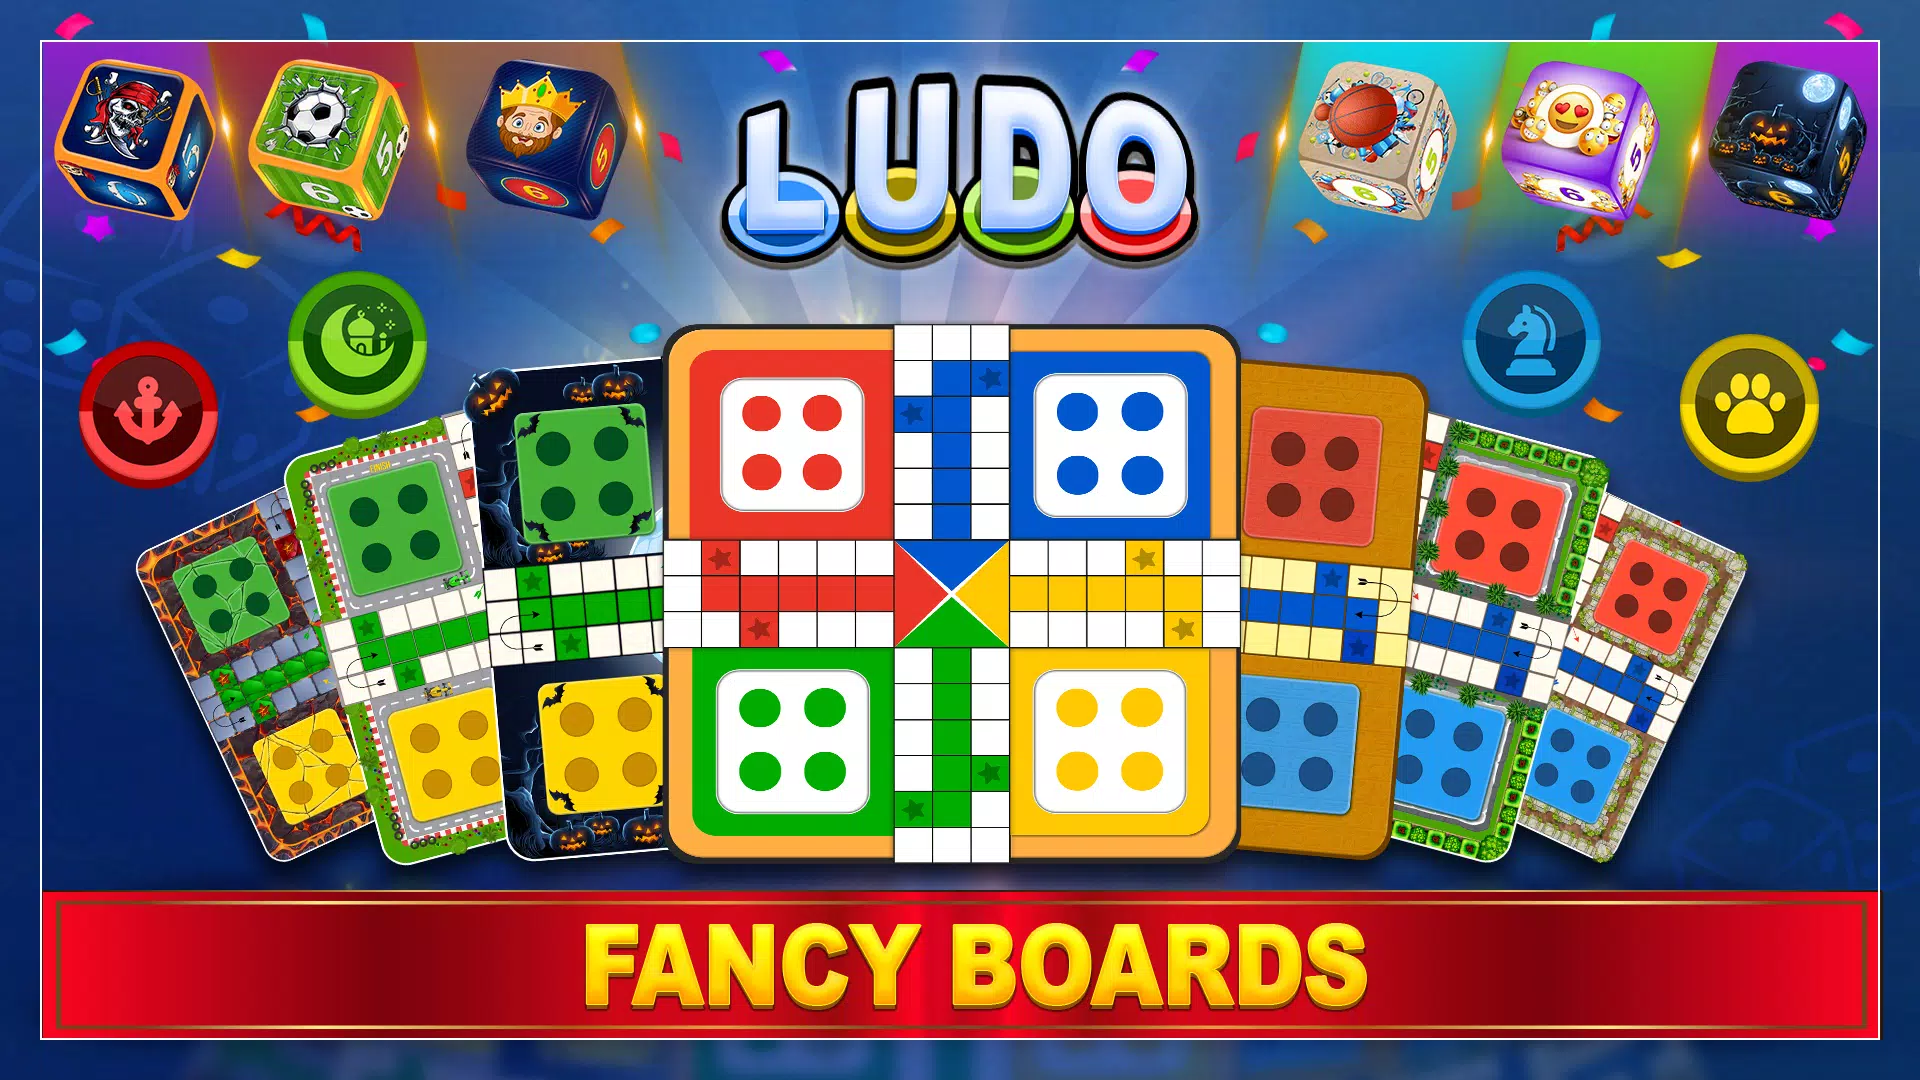 Ludo Badshah: Fun Board Game – Apps no Google Play